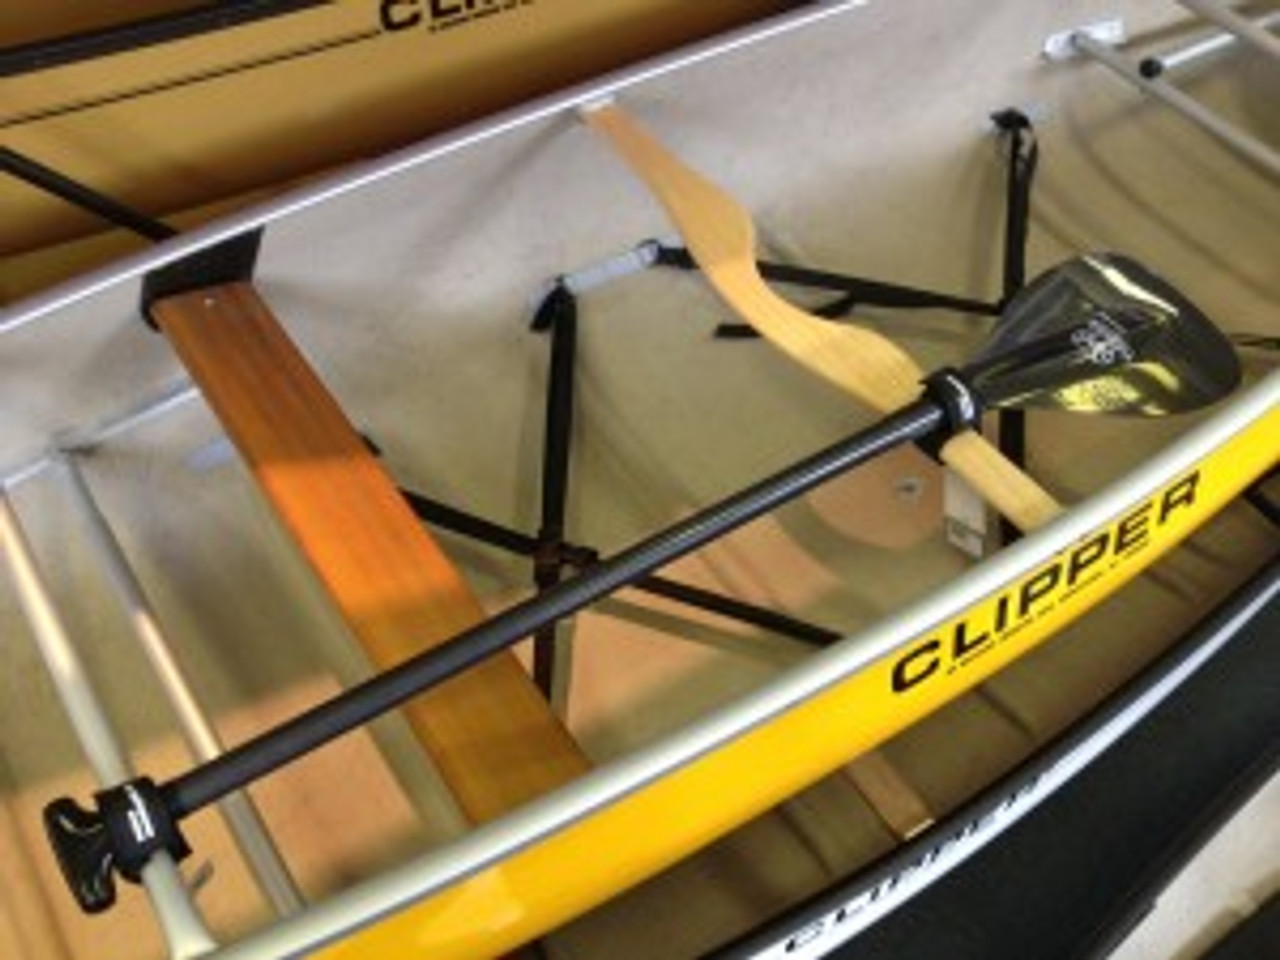  Dilwe Oar Holder Kayak Paddle Holder, 1 Pair Paddle